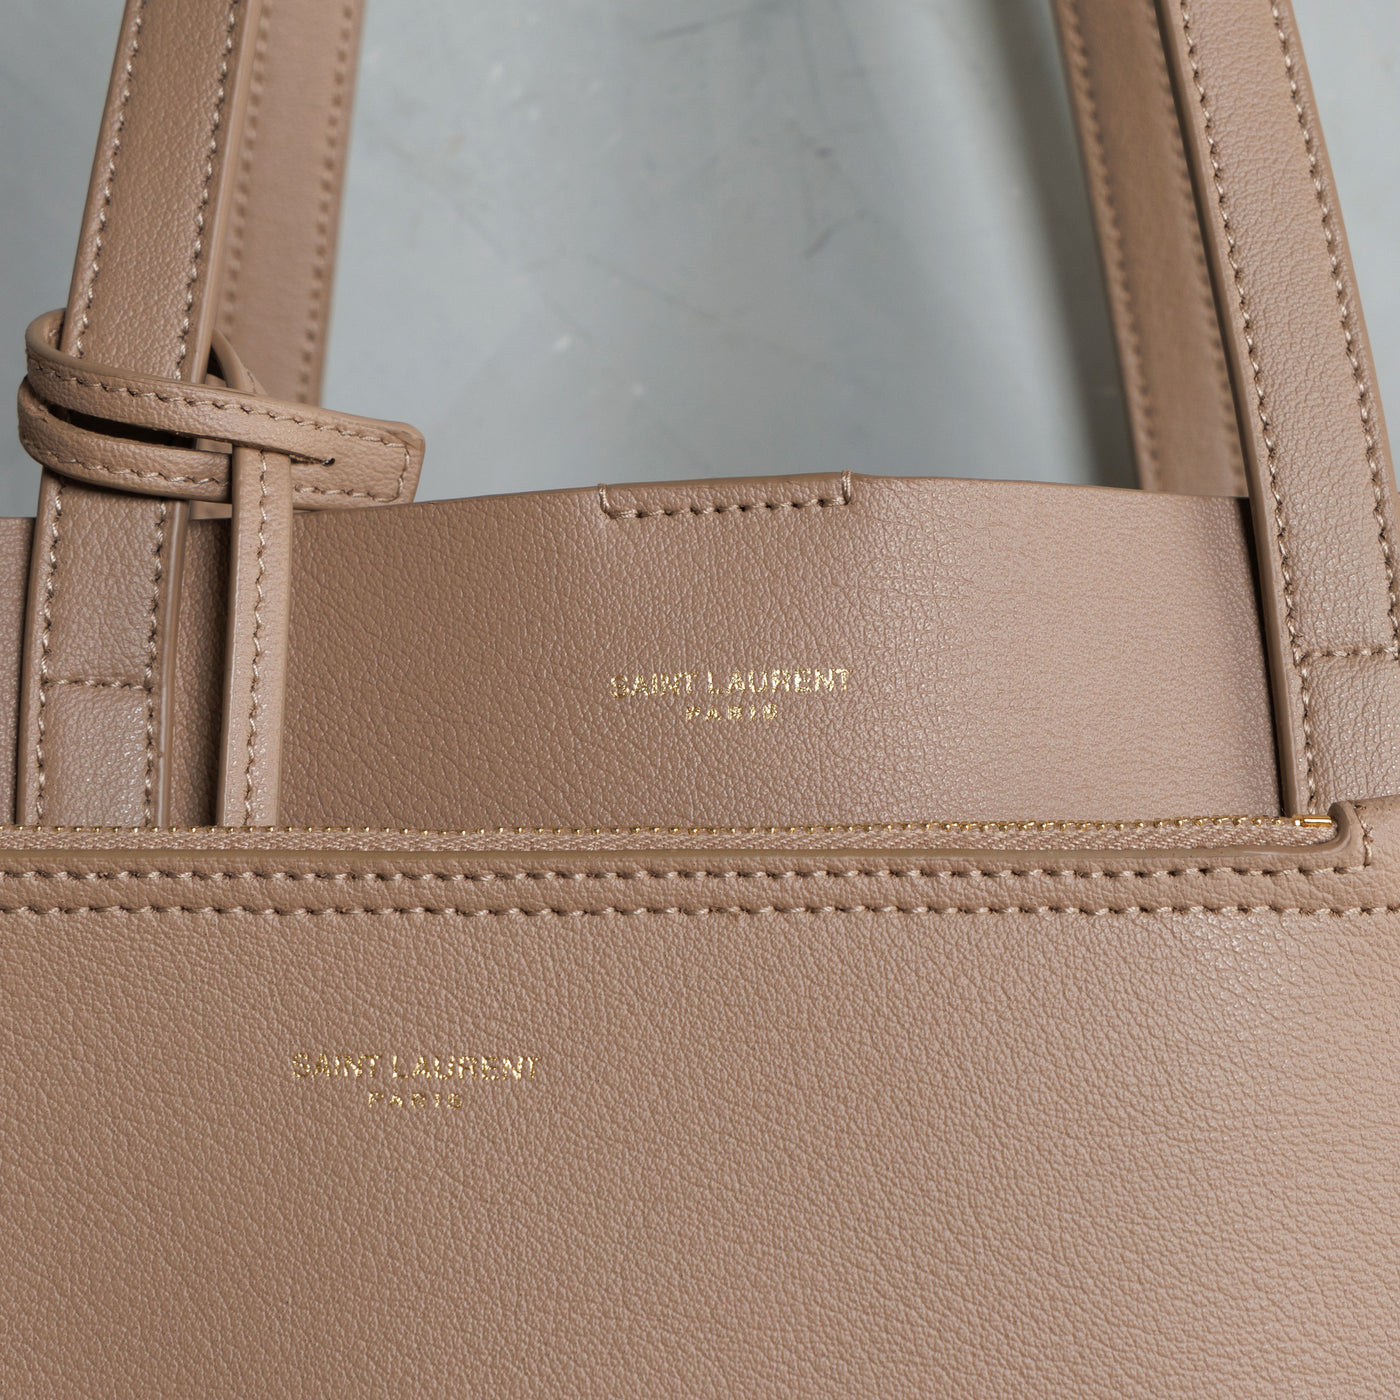 SAINT LAURENT leather dark beige shopping tote bag